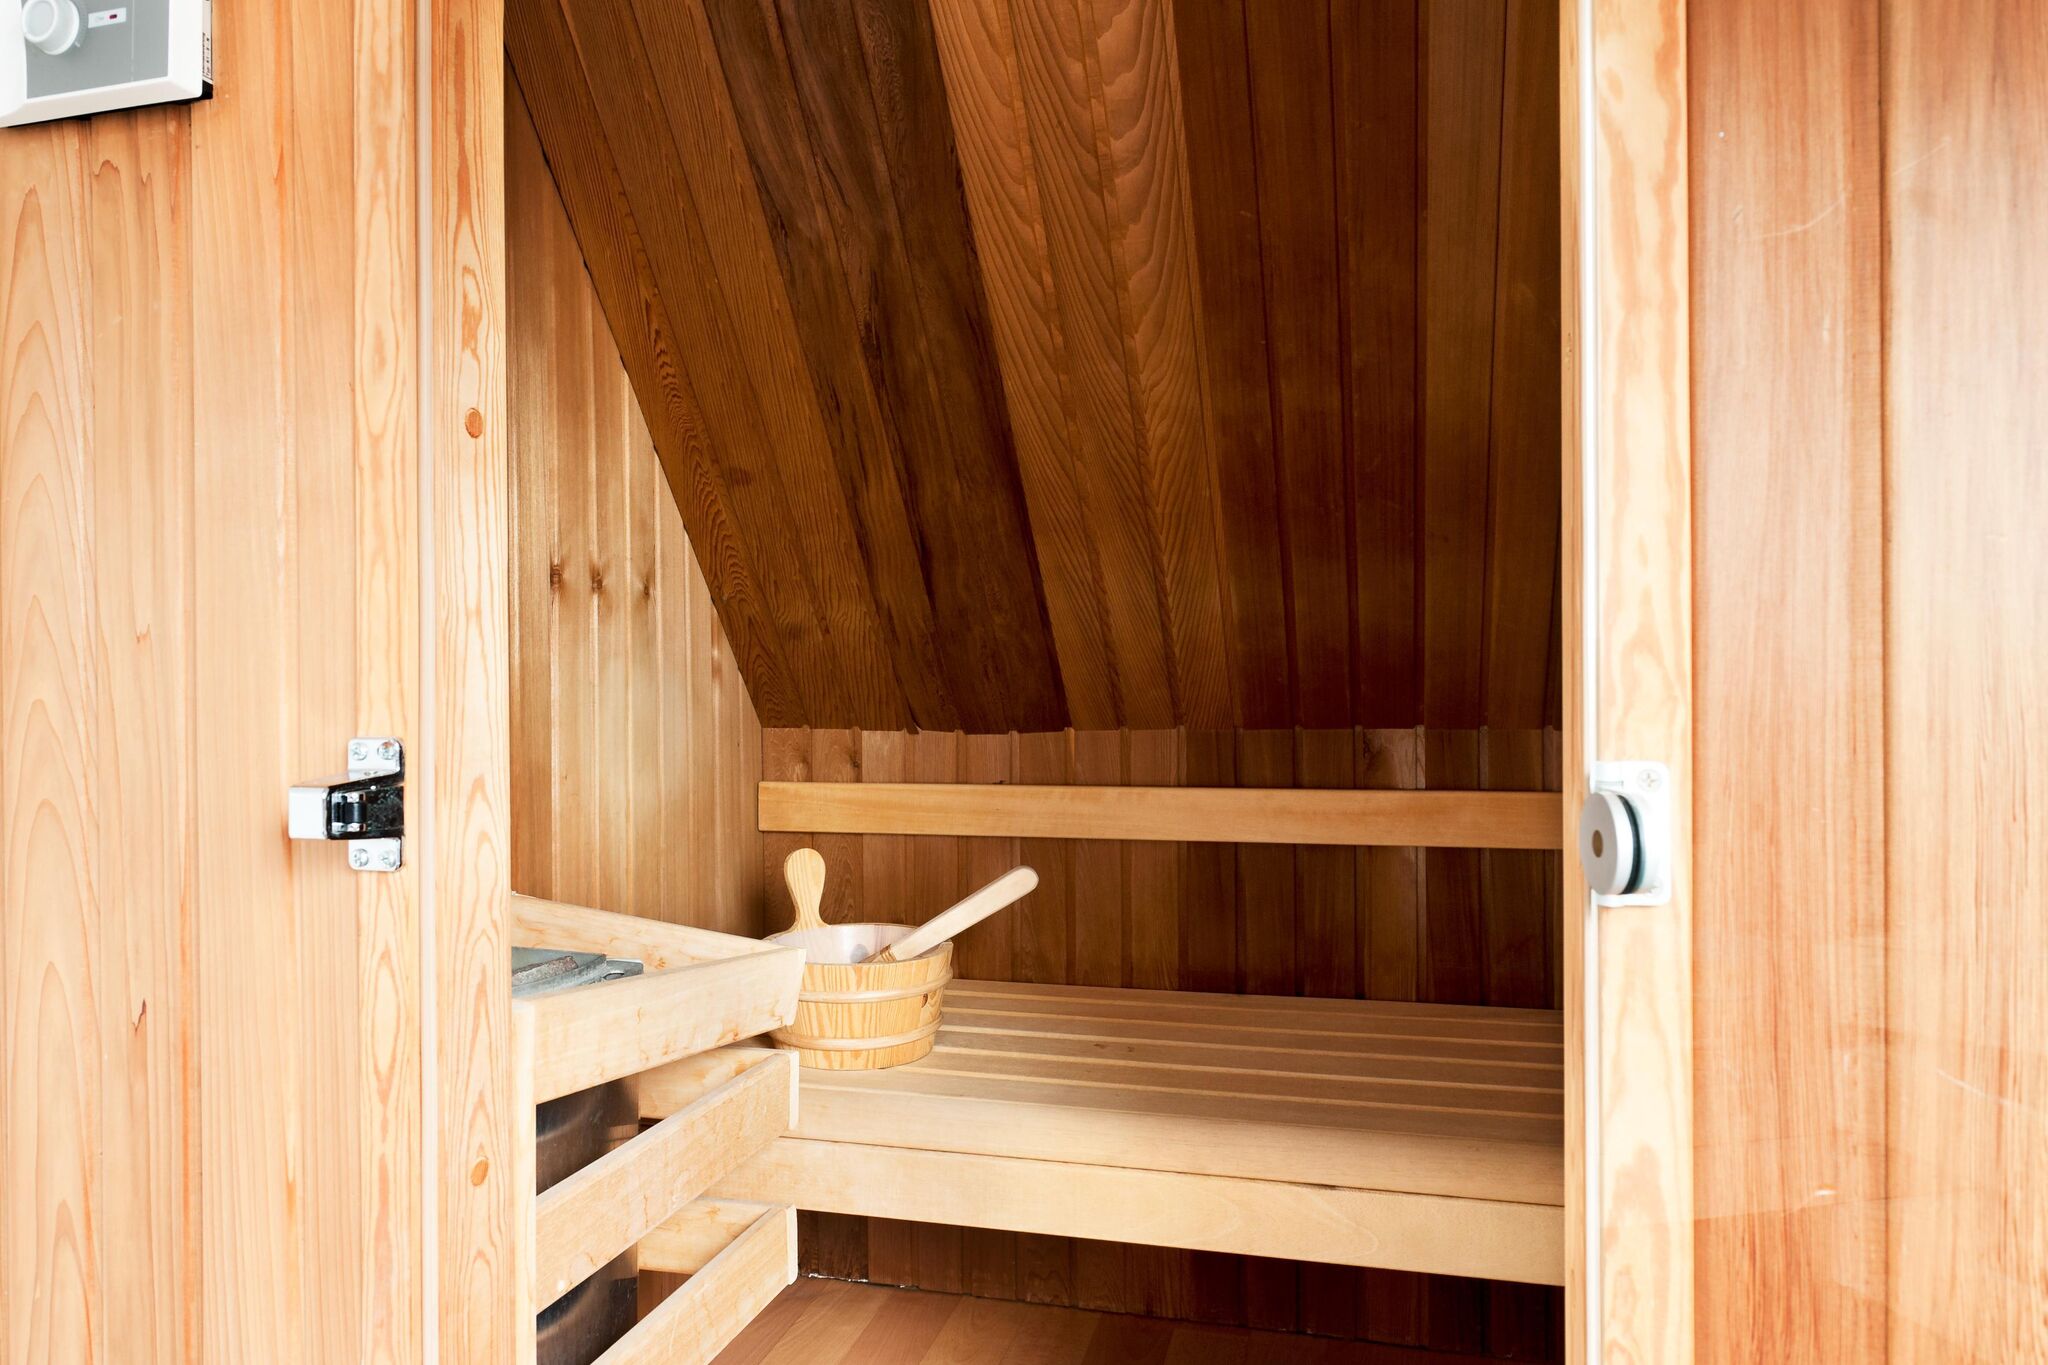 Net huis  in Earnewâld met buitenspa en sauna